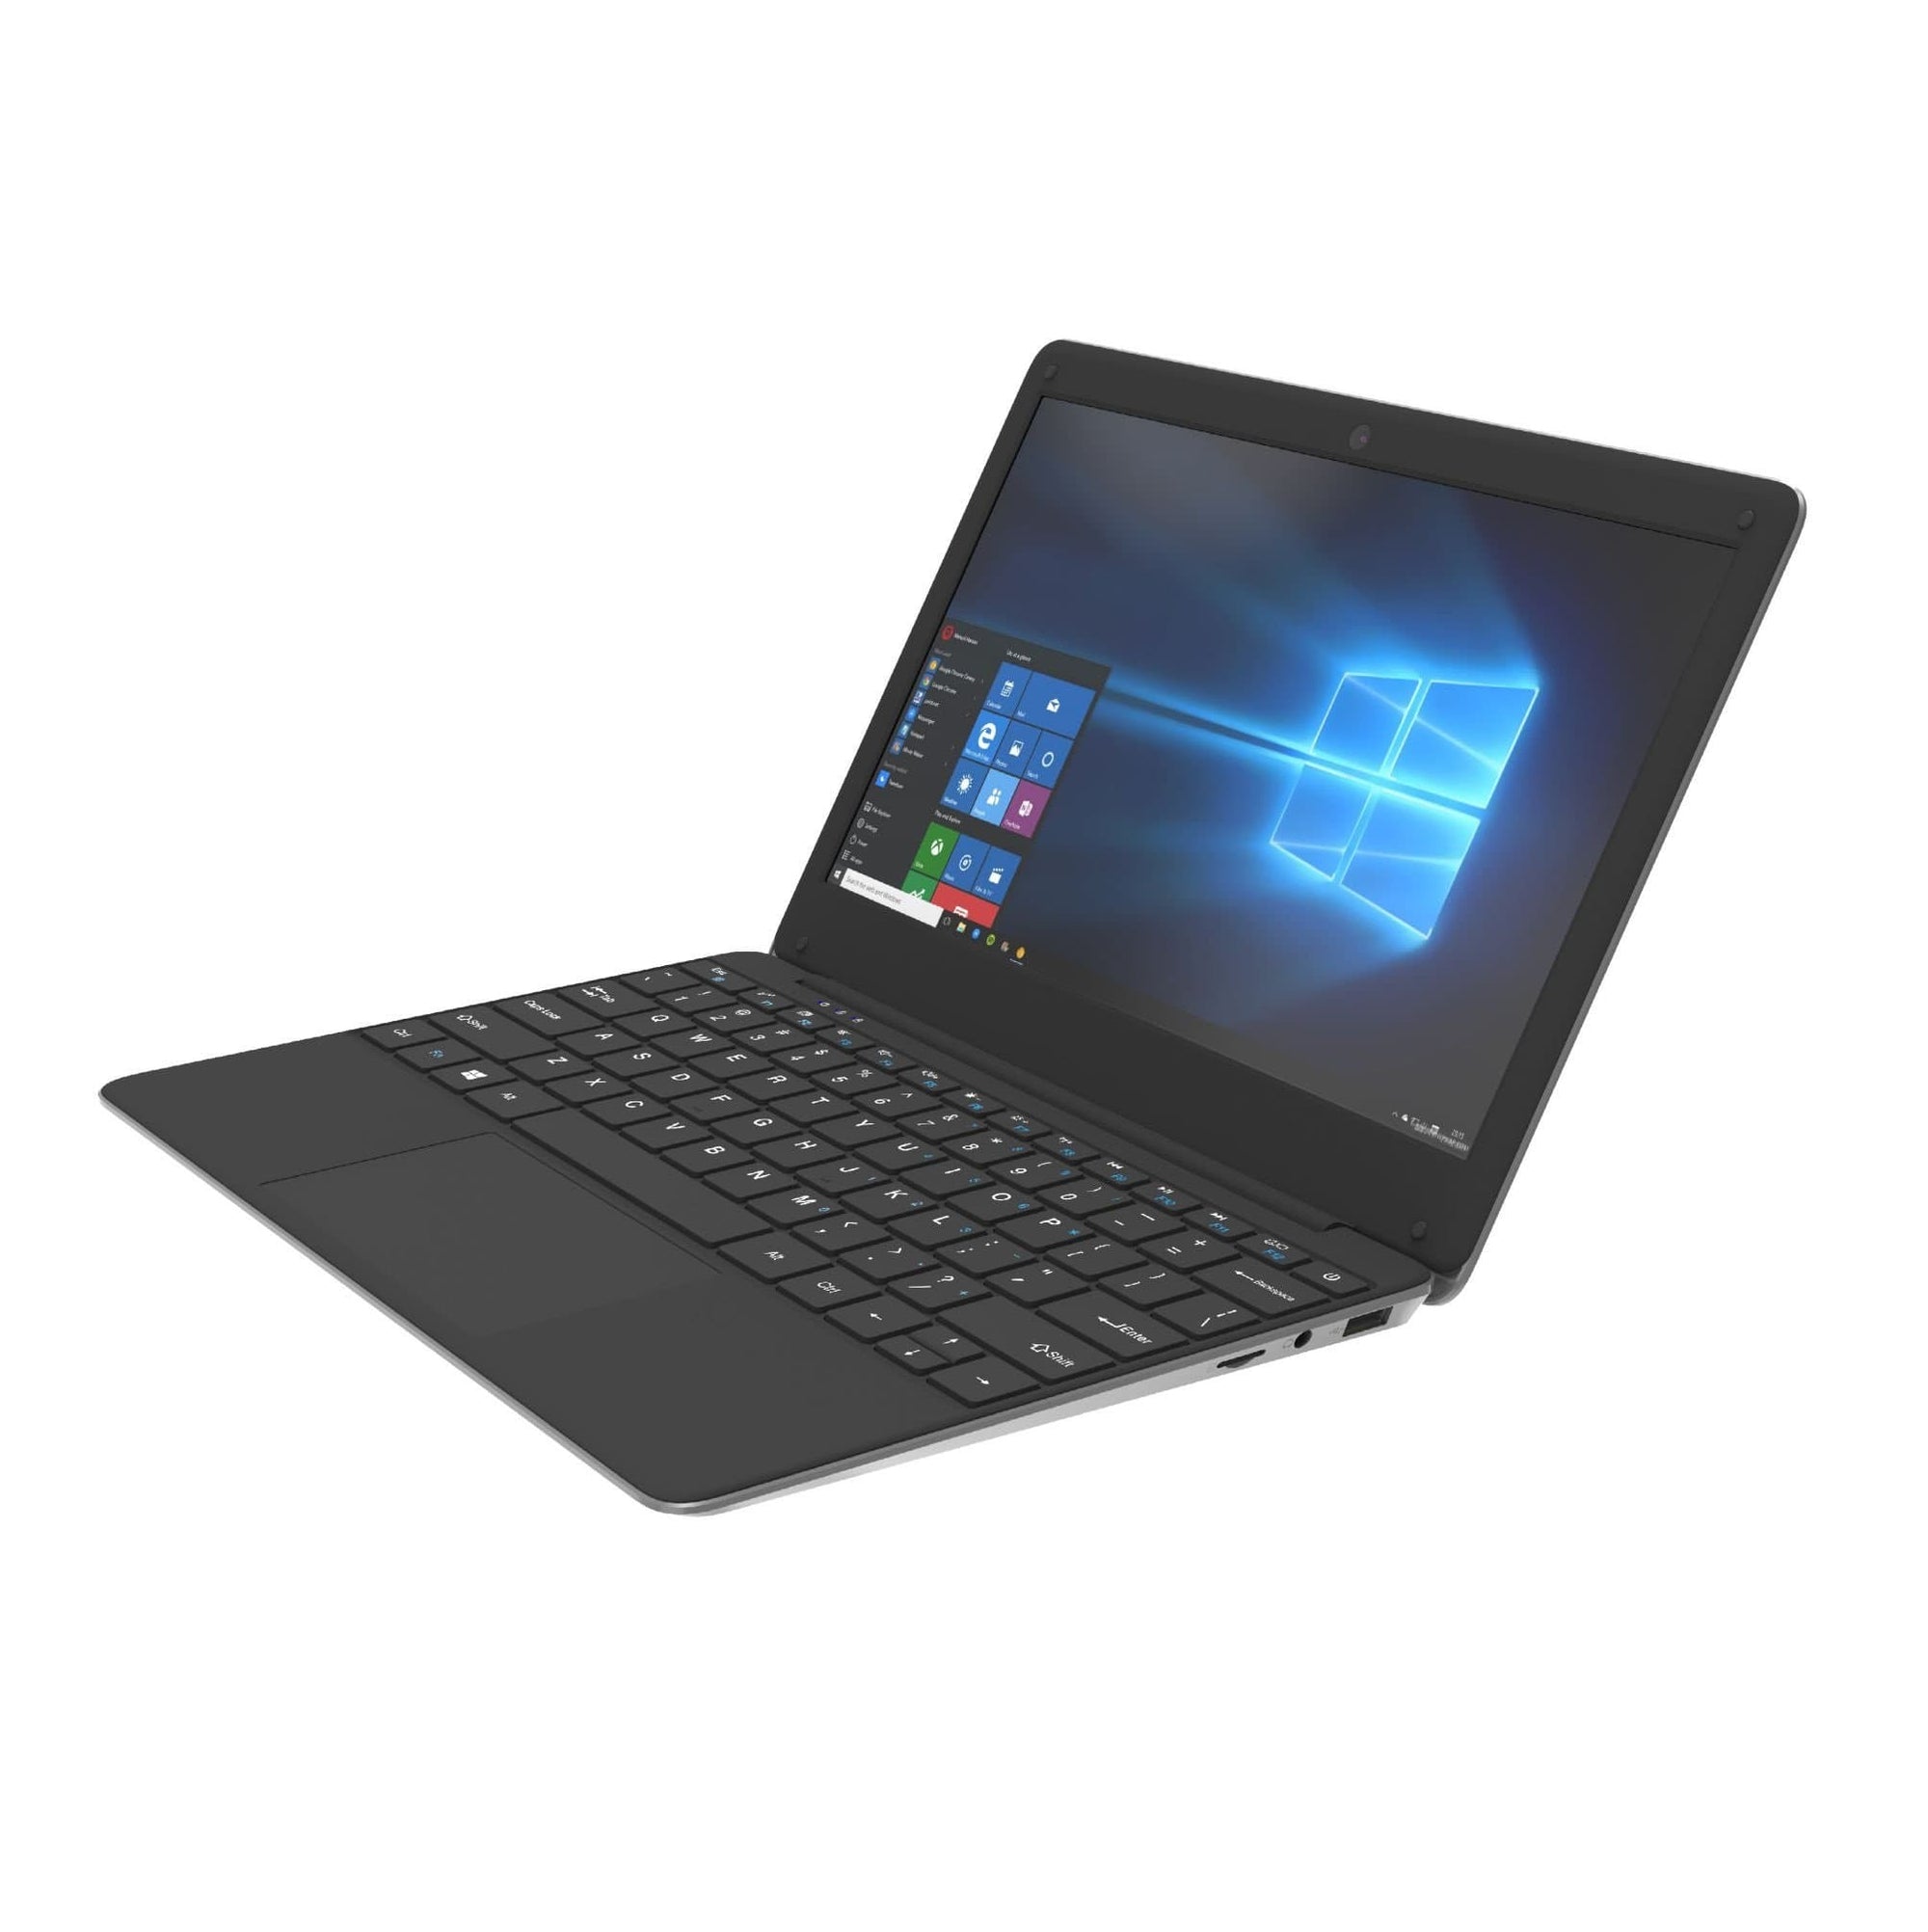 NB1105A 11.6 inch HD Laptop J4105 Quad-core 2.5GHz 8GB RAM 64GB Window 10 Pro